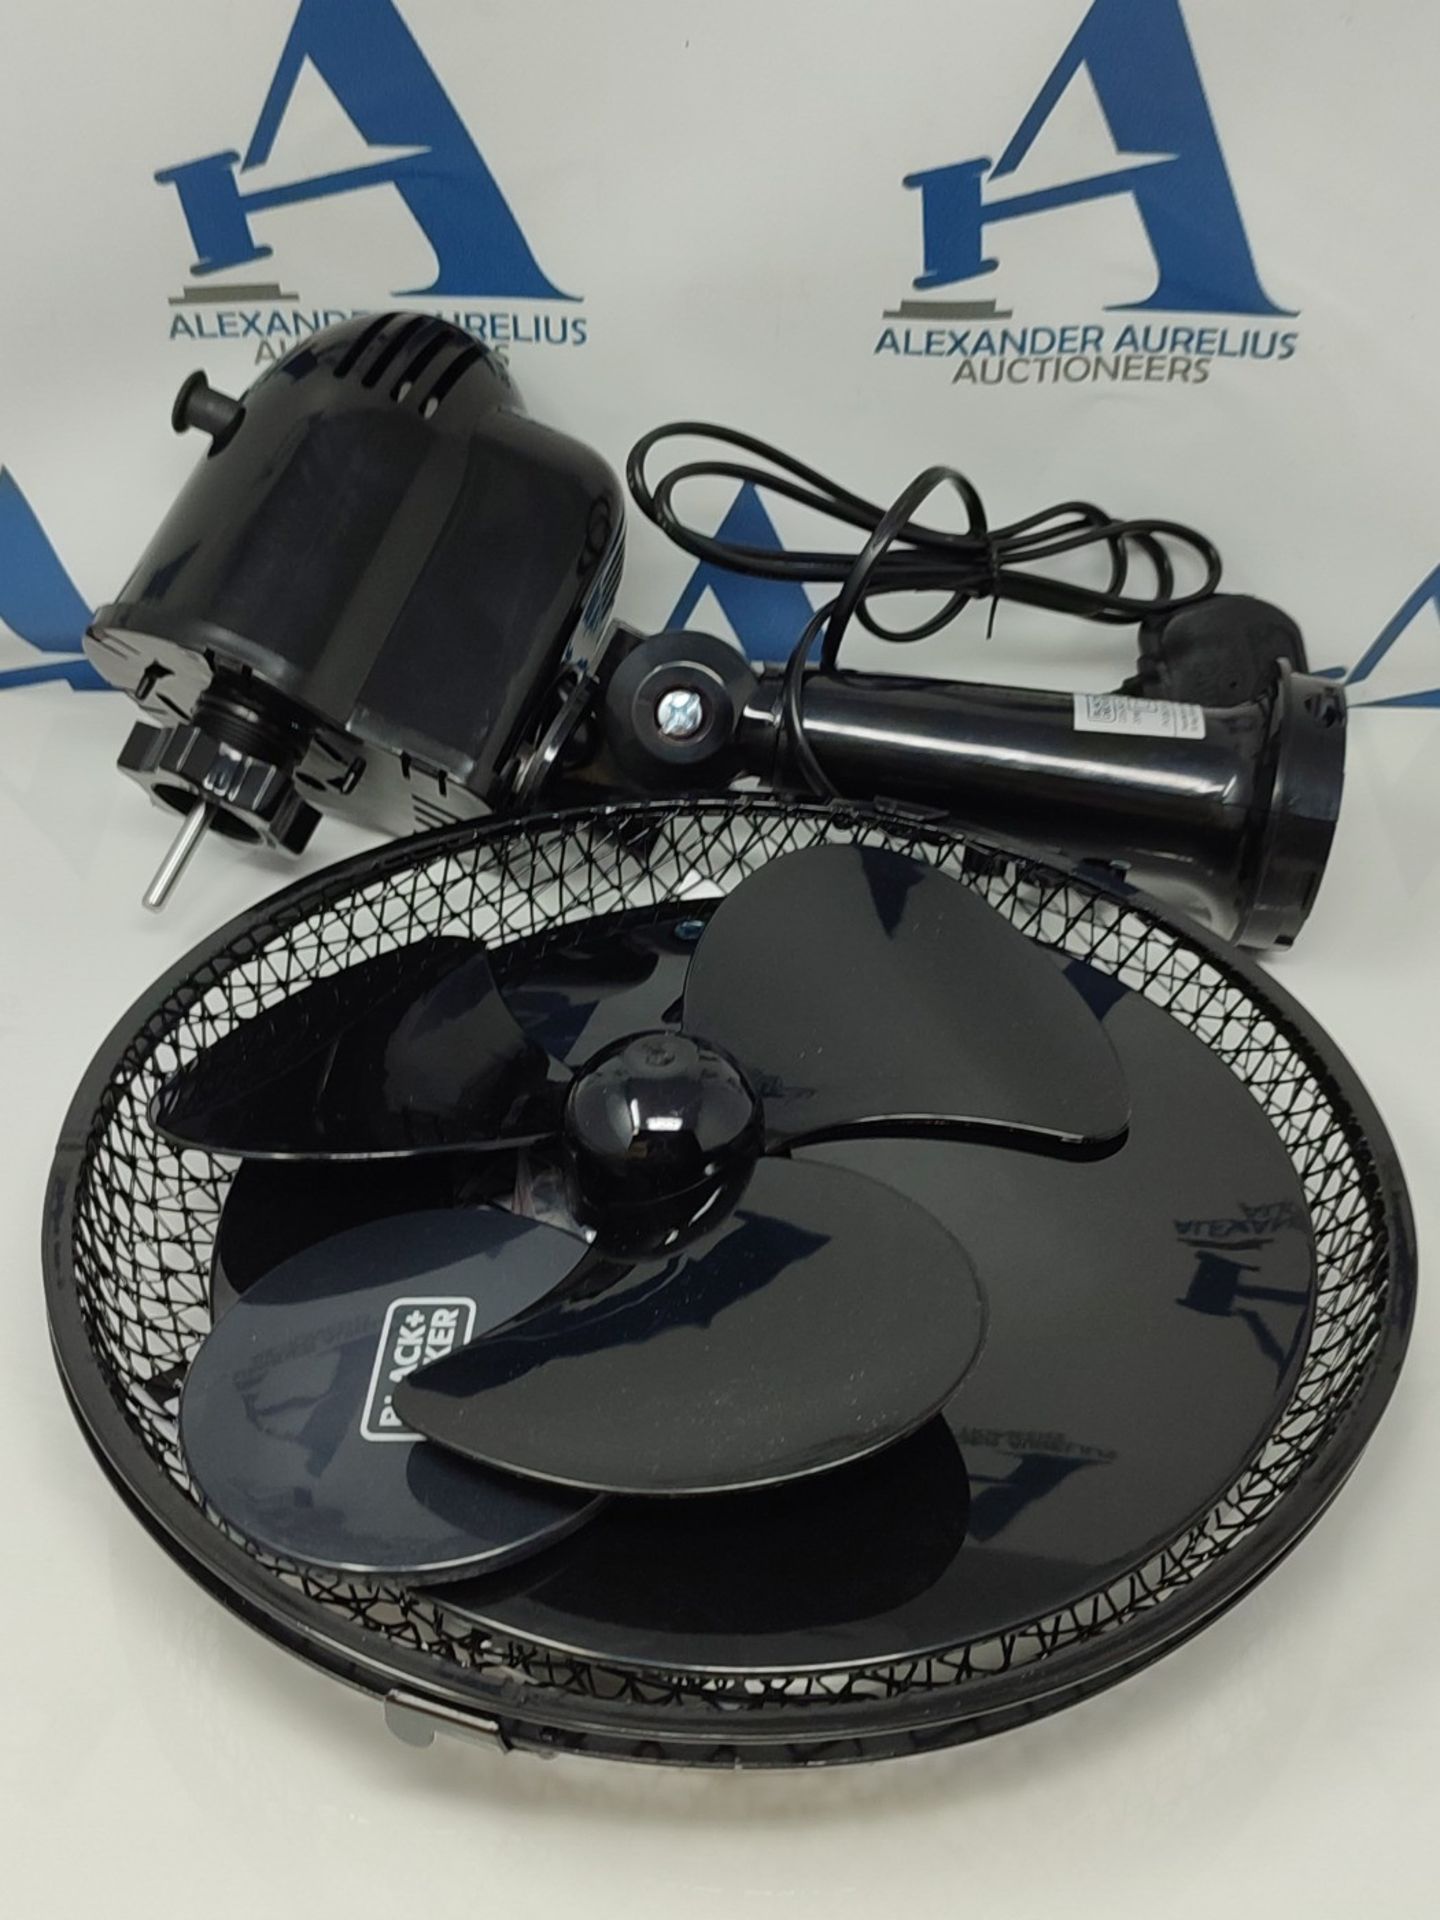 BLACK+DECKER BXFD52003GB Desk Fan with 2 Speeds, Rotary Oscillation, 9 Inch, 20W, Blac - Image 2 of 2